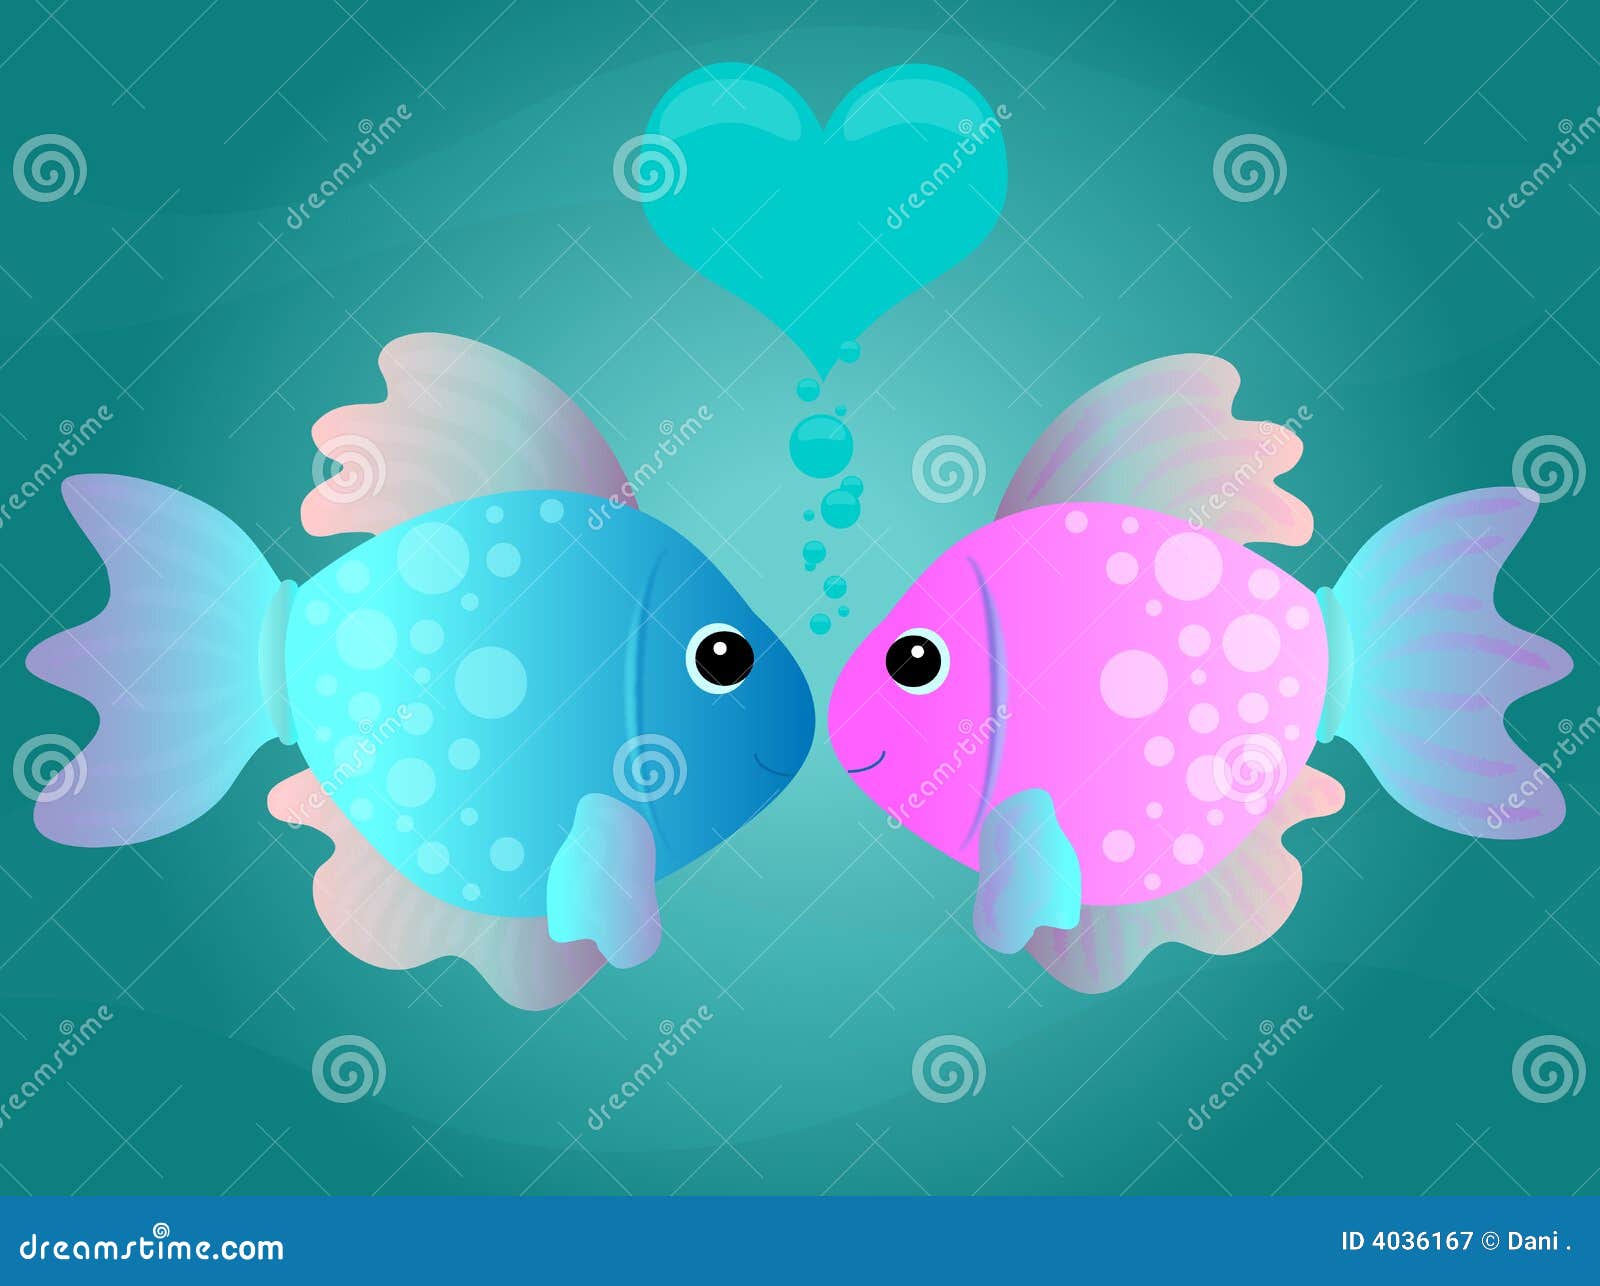 free kissing fish clipart - photo #46